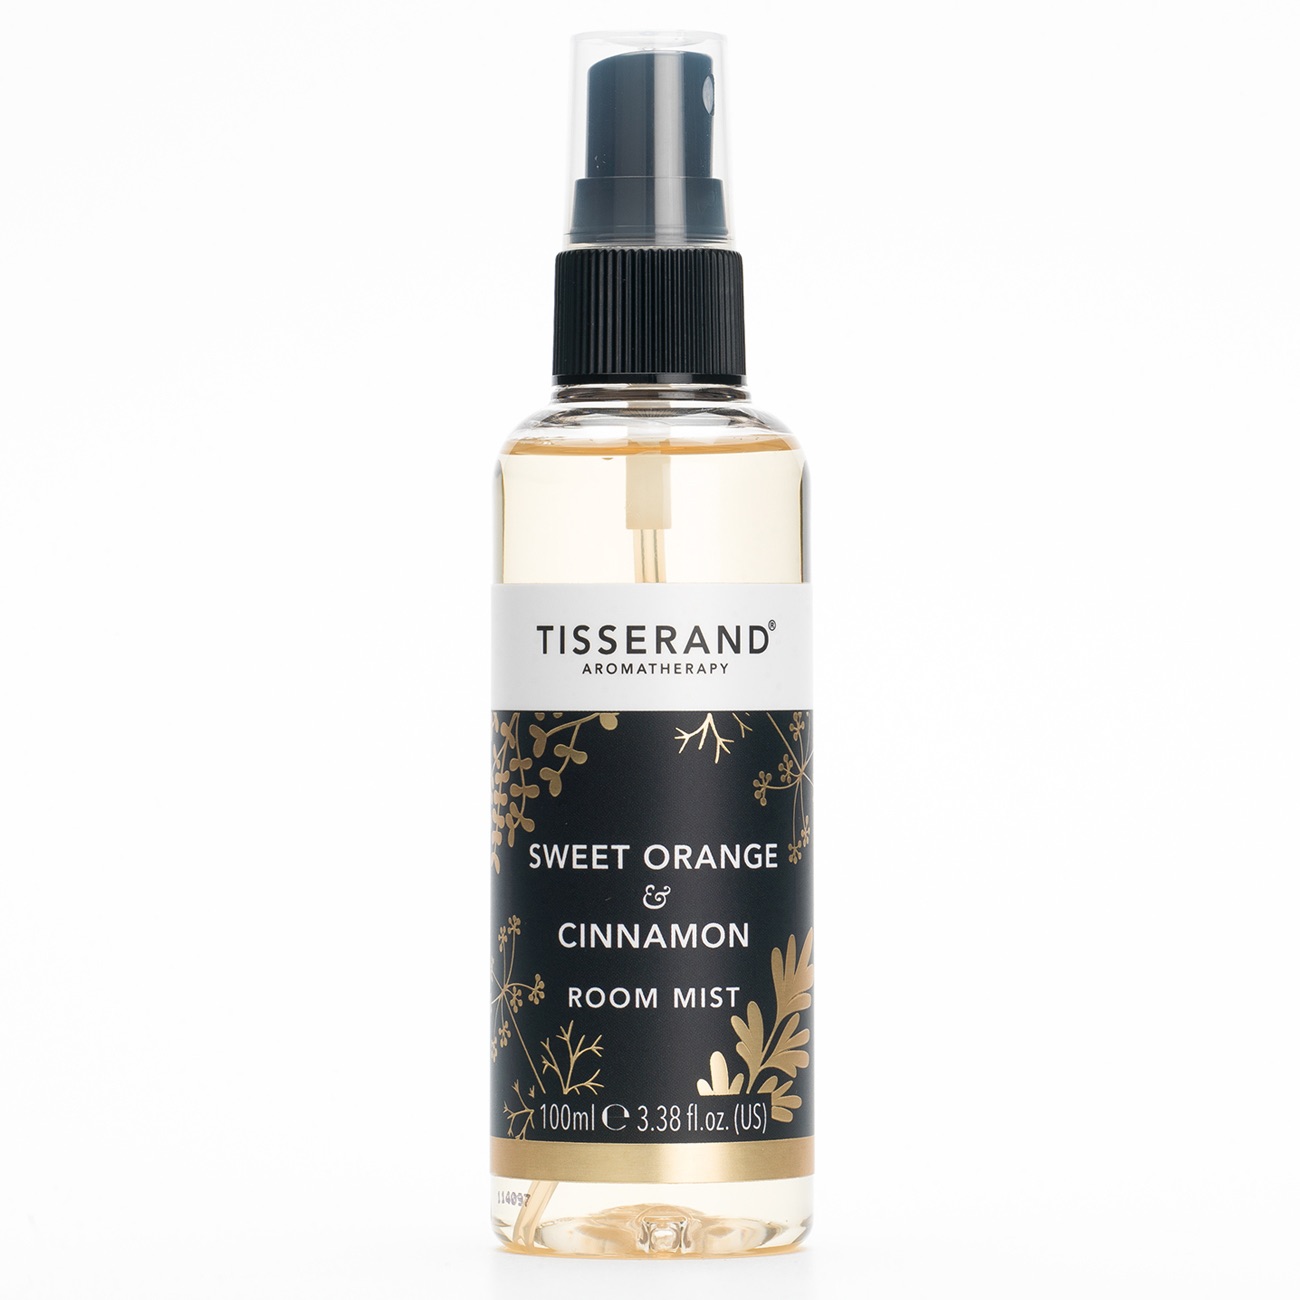 Tisserand Aromatherapy Sweet Orange & Cinnamon Room Mist 100ml